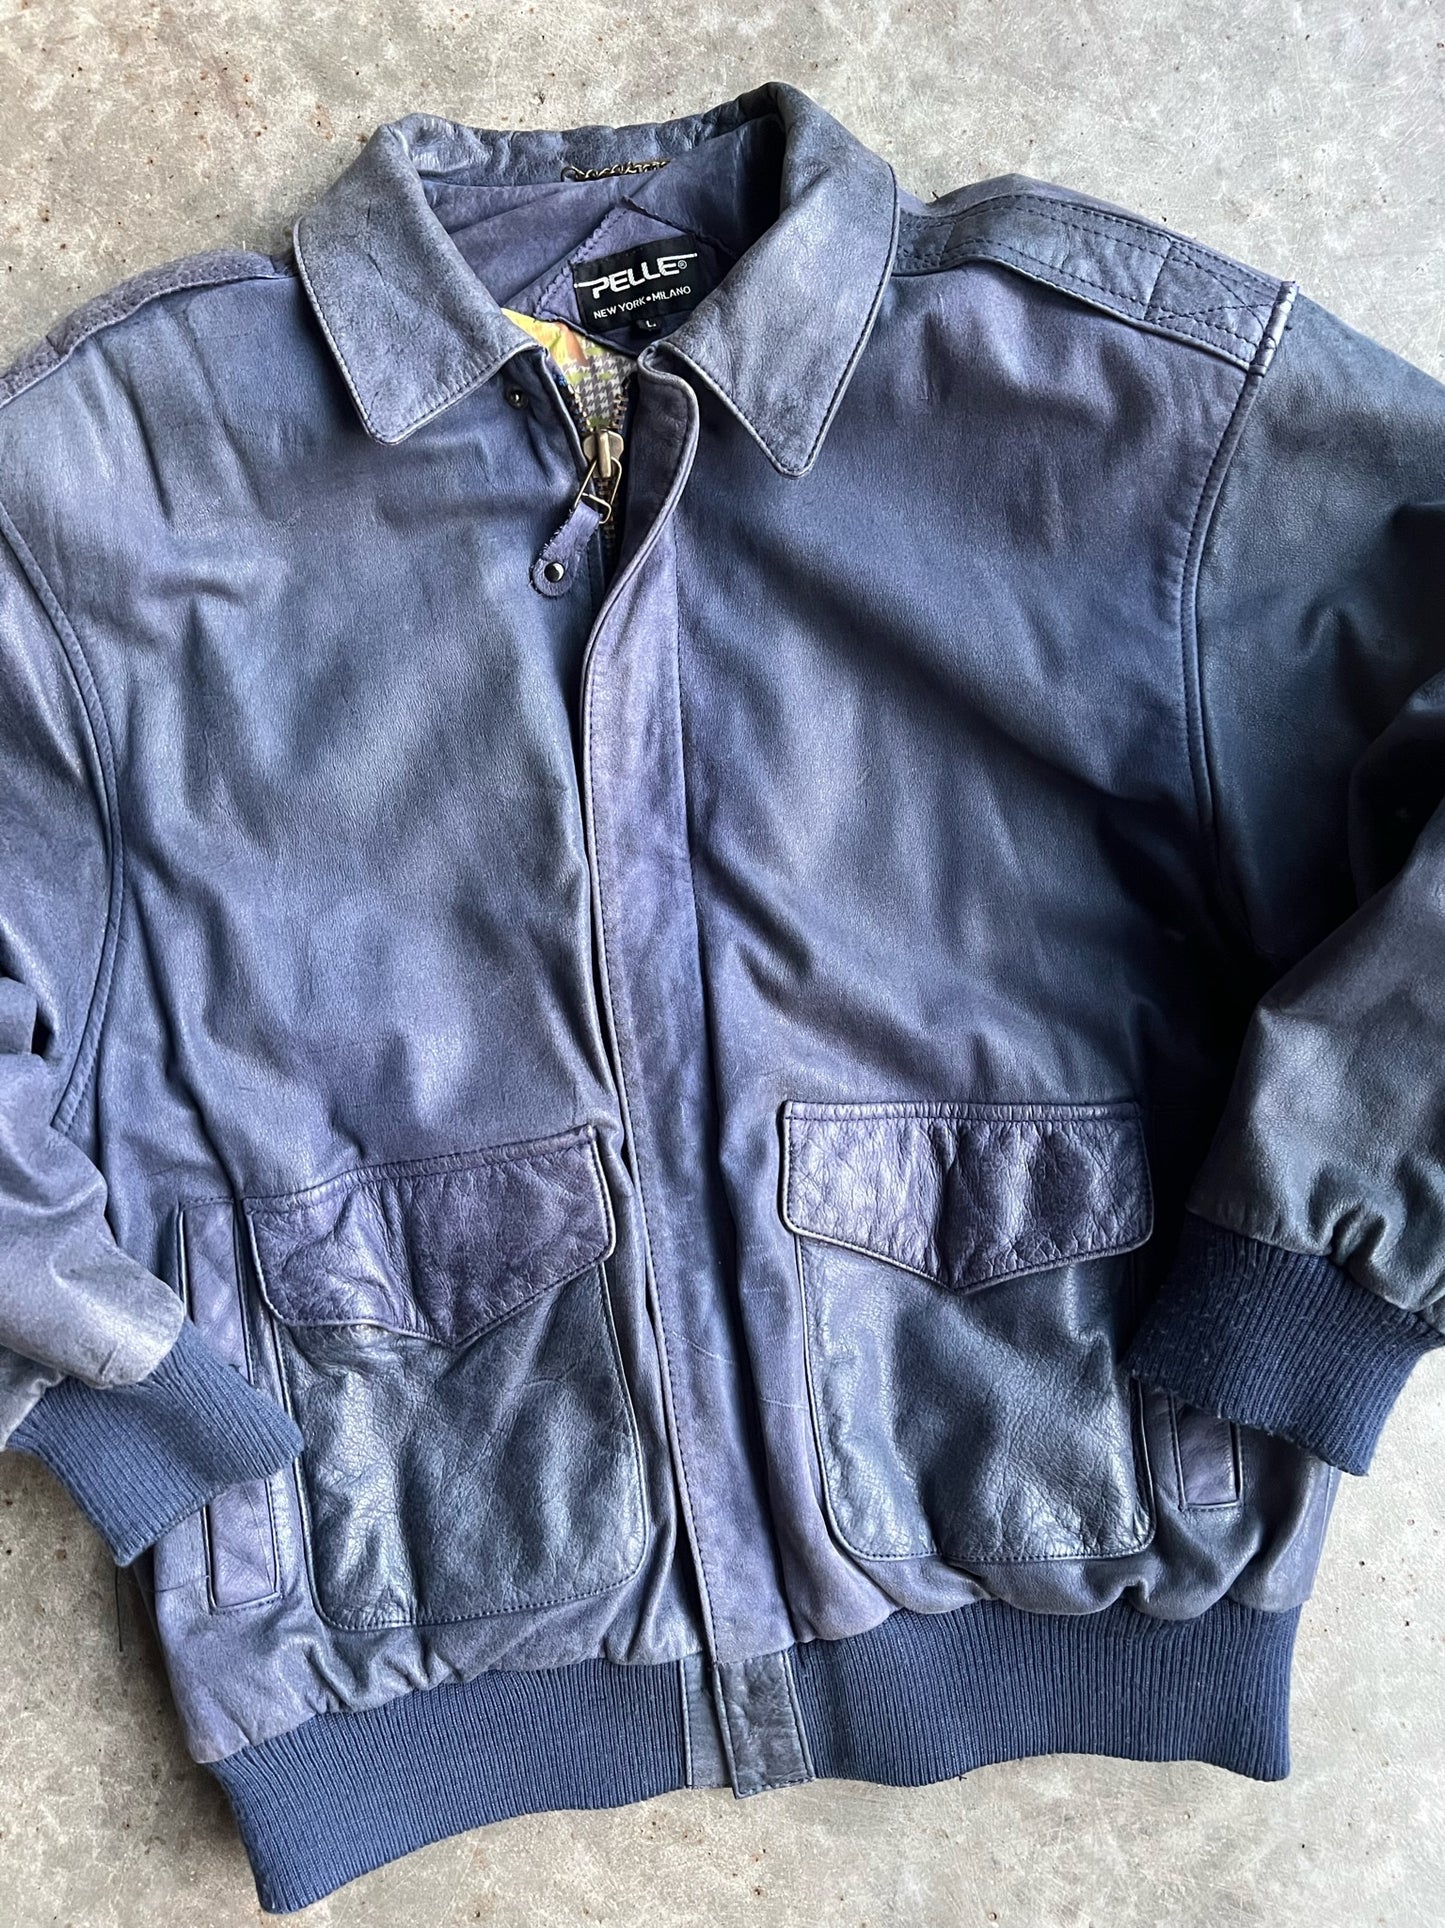 Vintage Pelle Leather Jacket - L